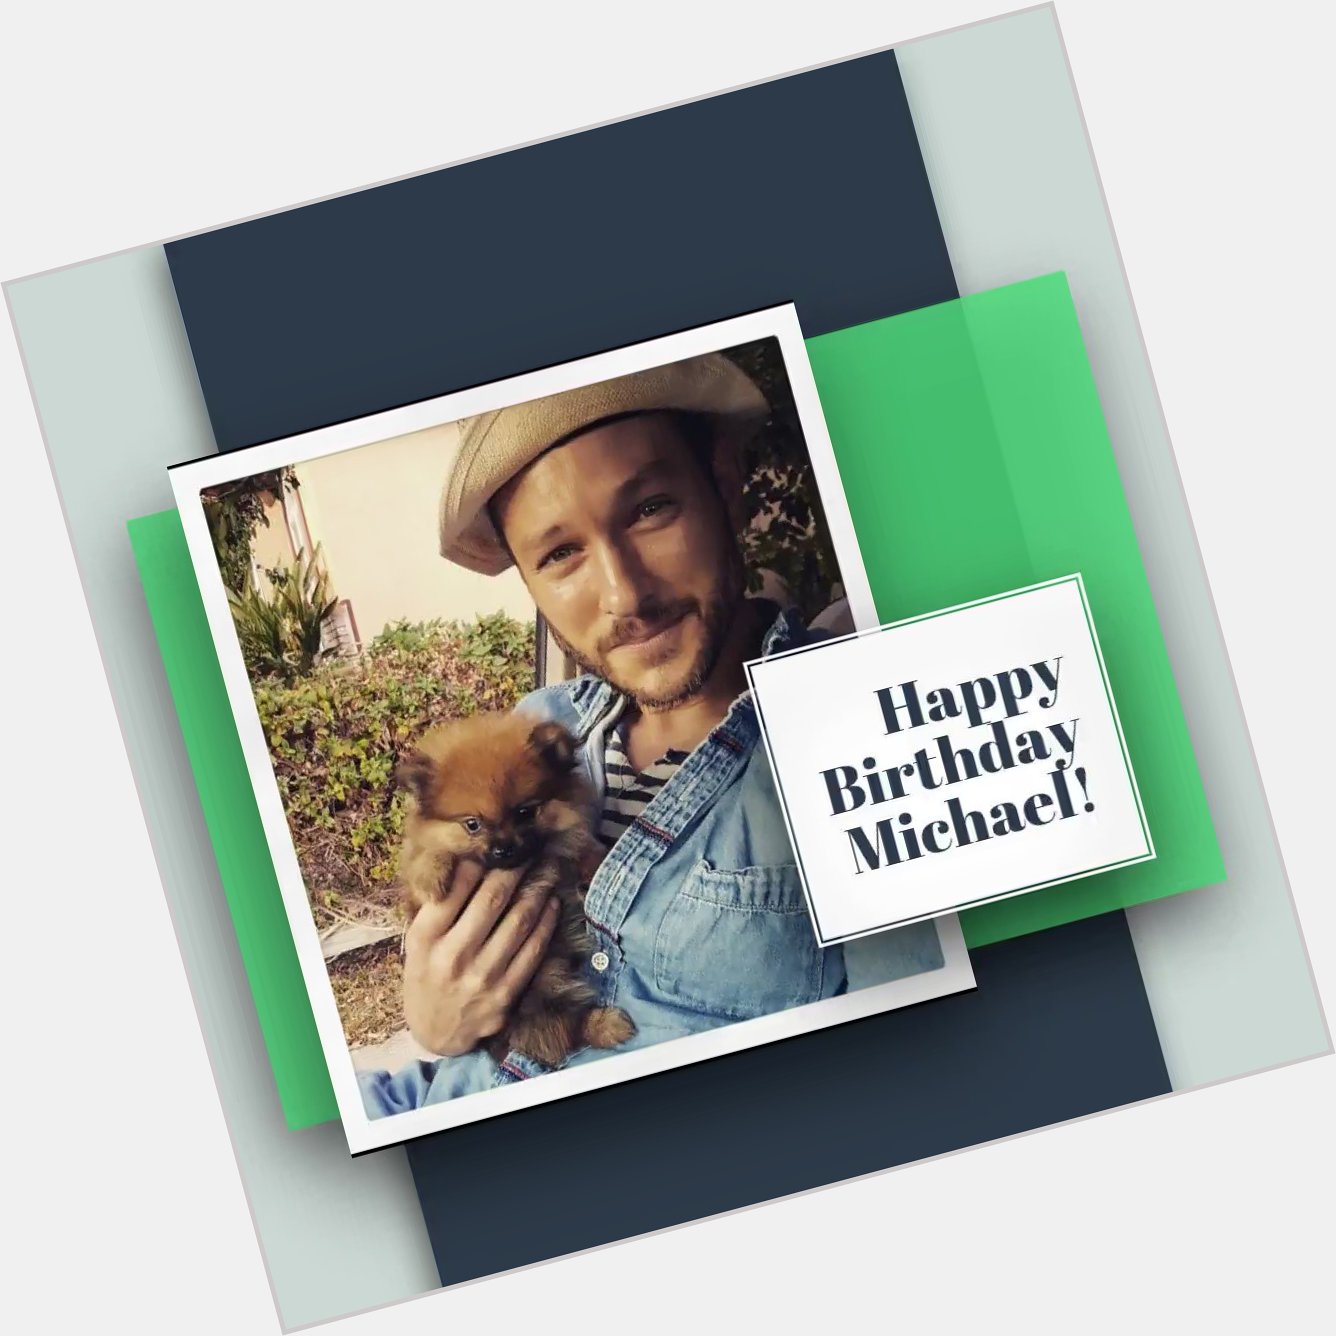 Welcome back Michael Graziadei & happy birthday!  